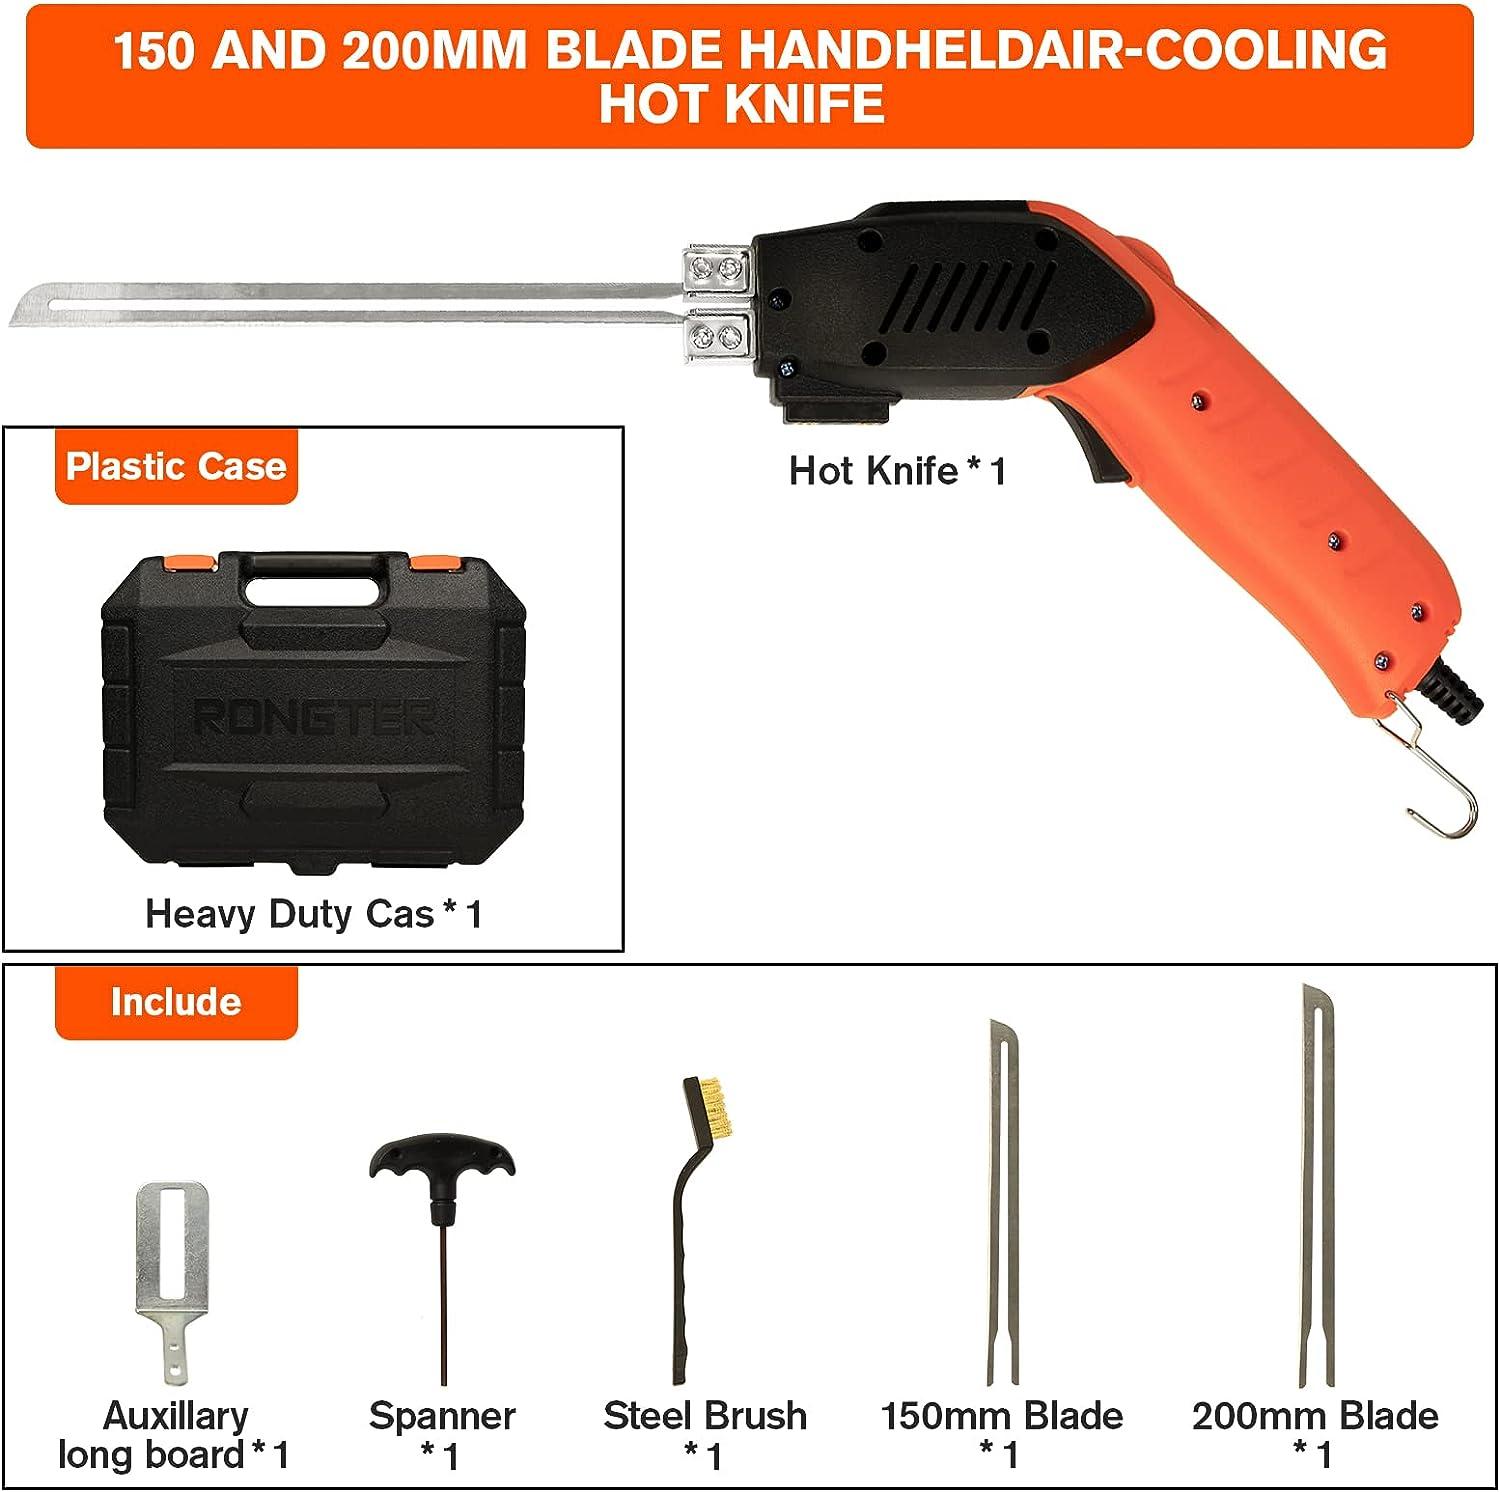 RONGTER Foam (200W) - Air Cooled Electric hot knife - Foam cutting